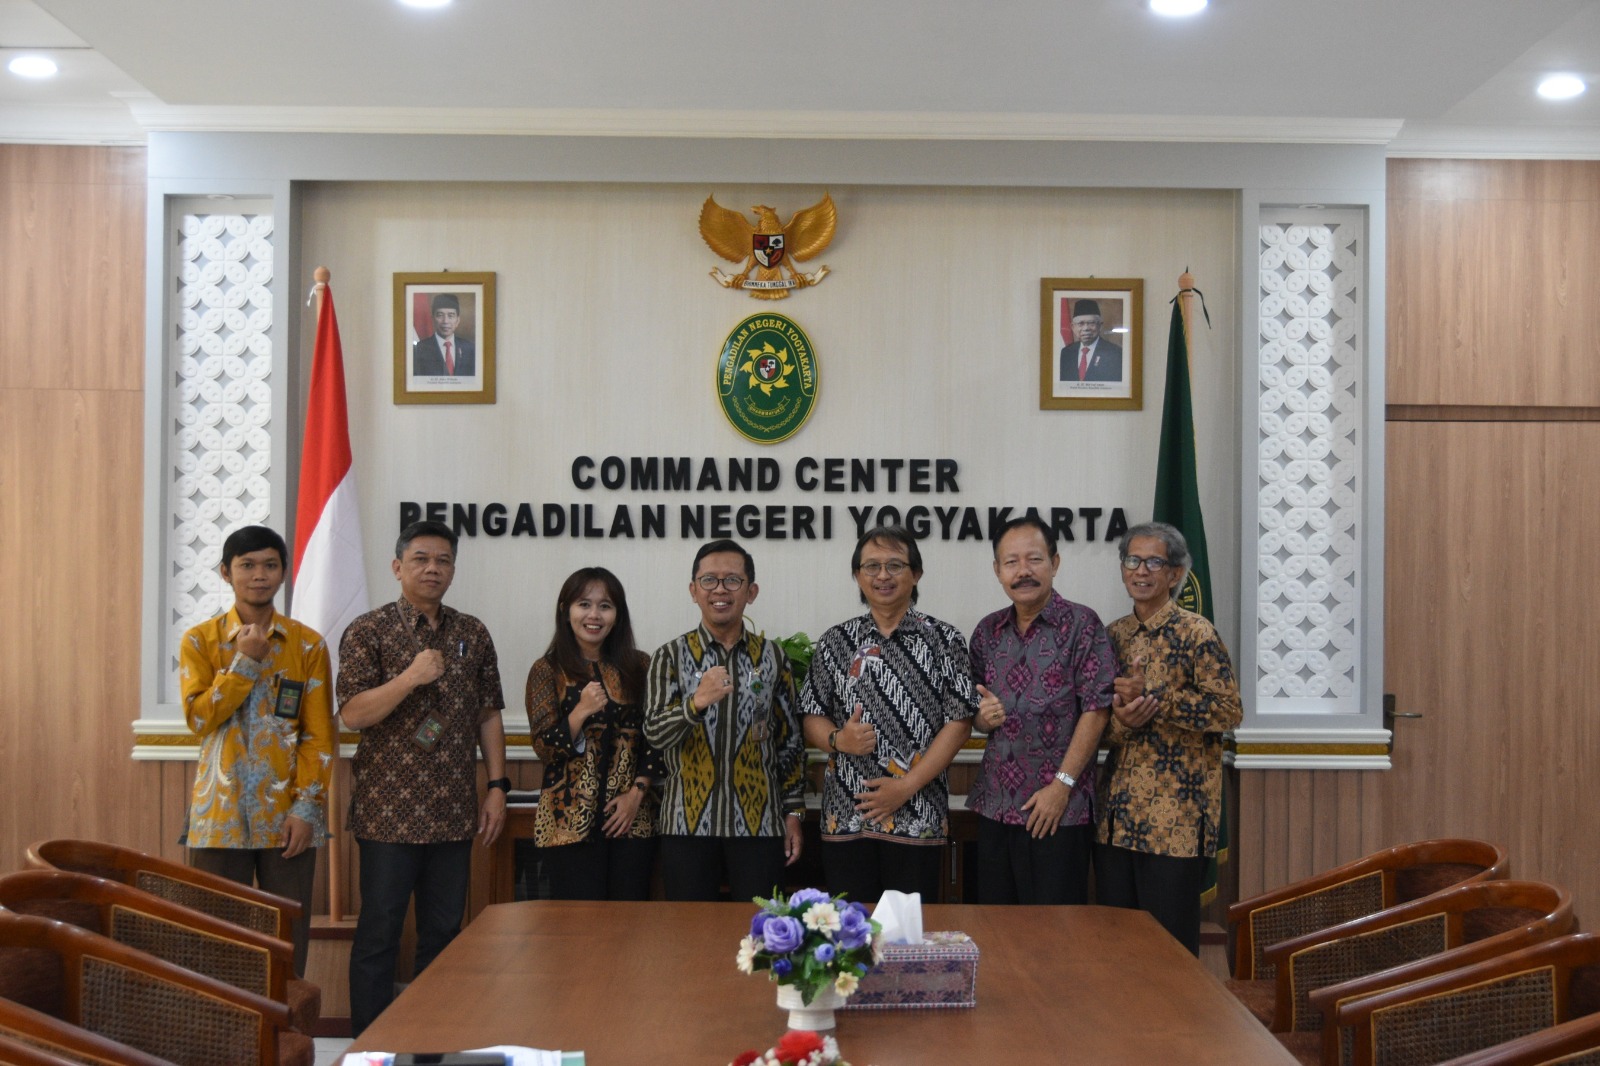 Kunjungan Kerja Fakultas Hukum Universitas Atma Jaya Yogyakarta ke Pengadilan Negeri Yogyakarta